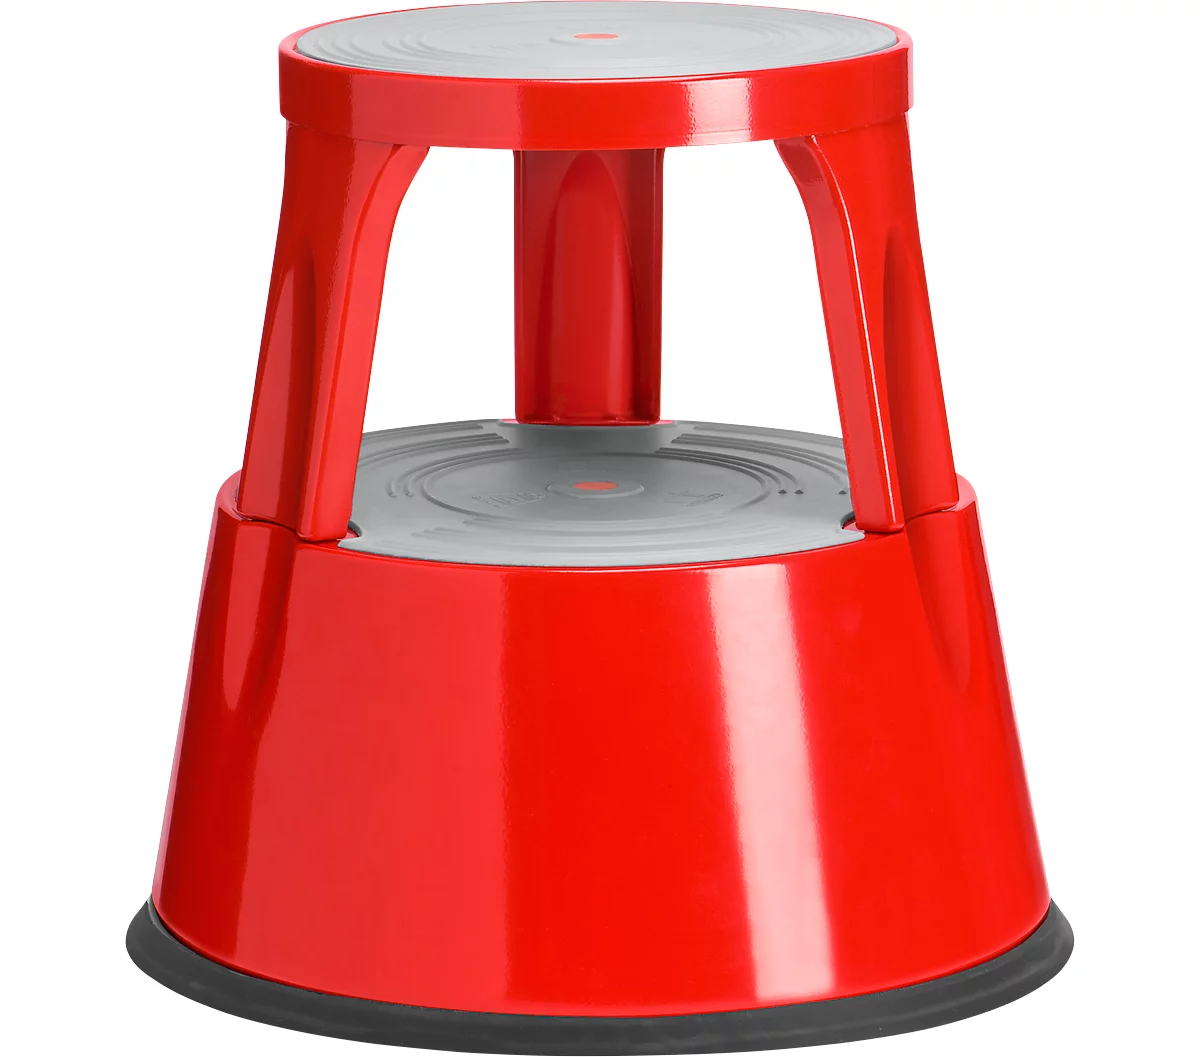 Fahrbarer Rolltritthocker, rutschfester Gummibelag, H 410 x ø 433/283 mm, bis 150 kg, rot